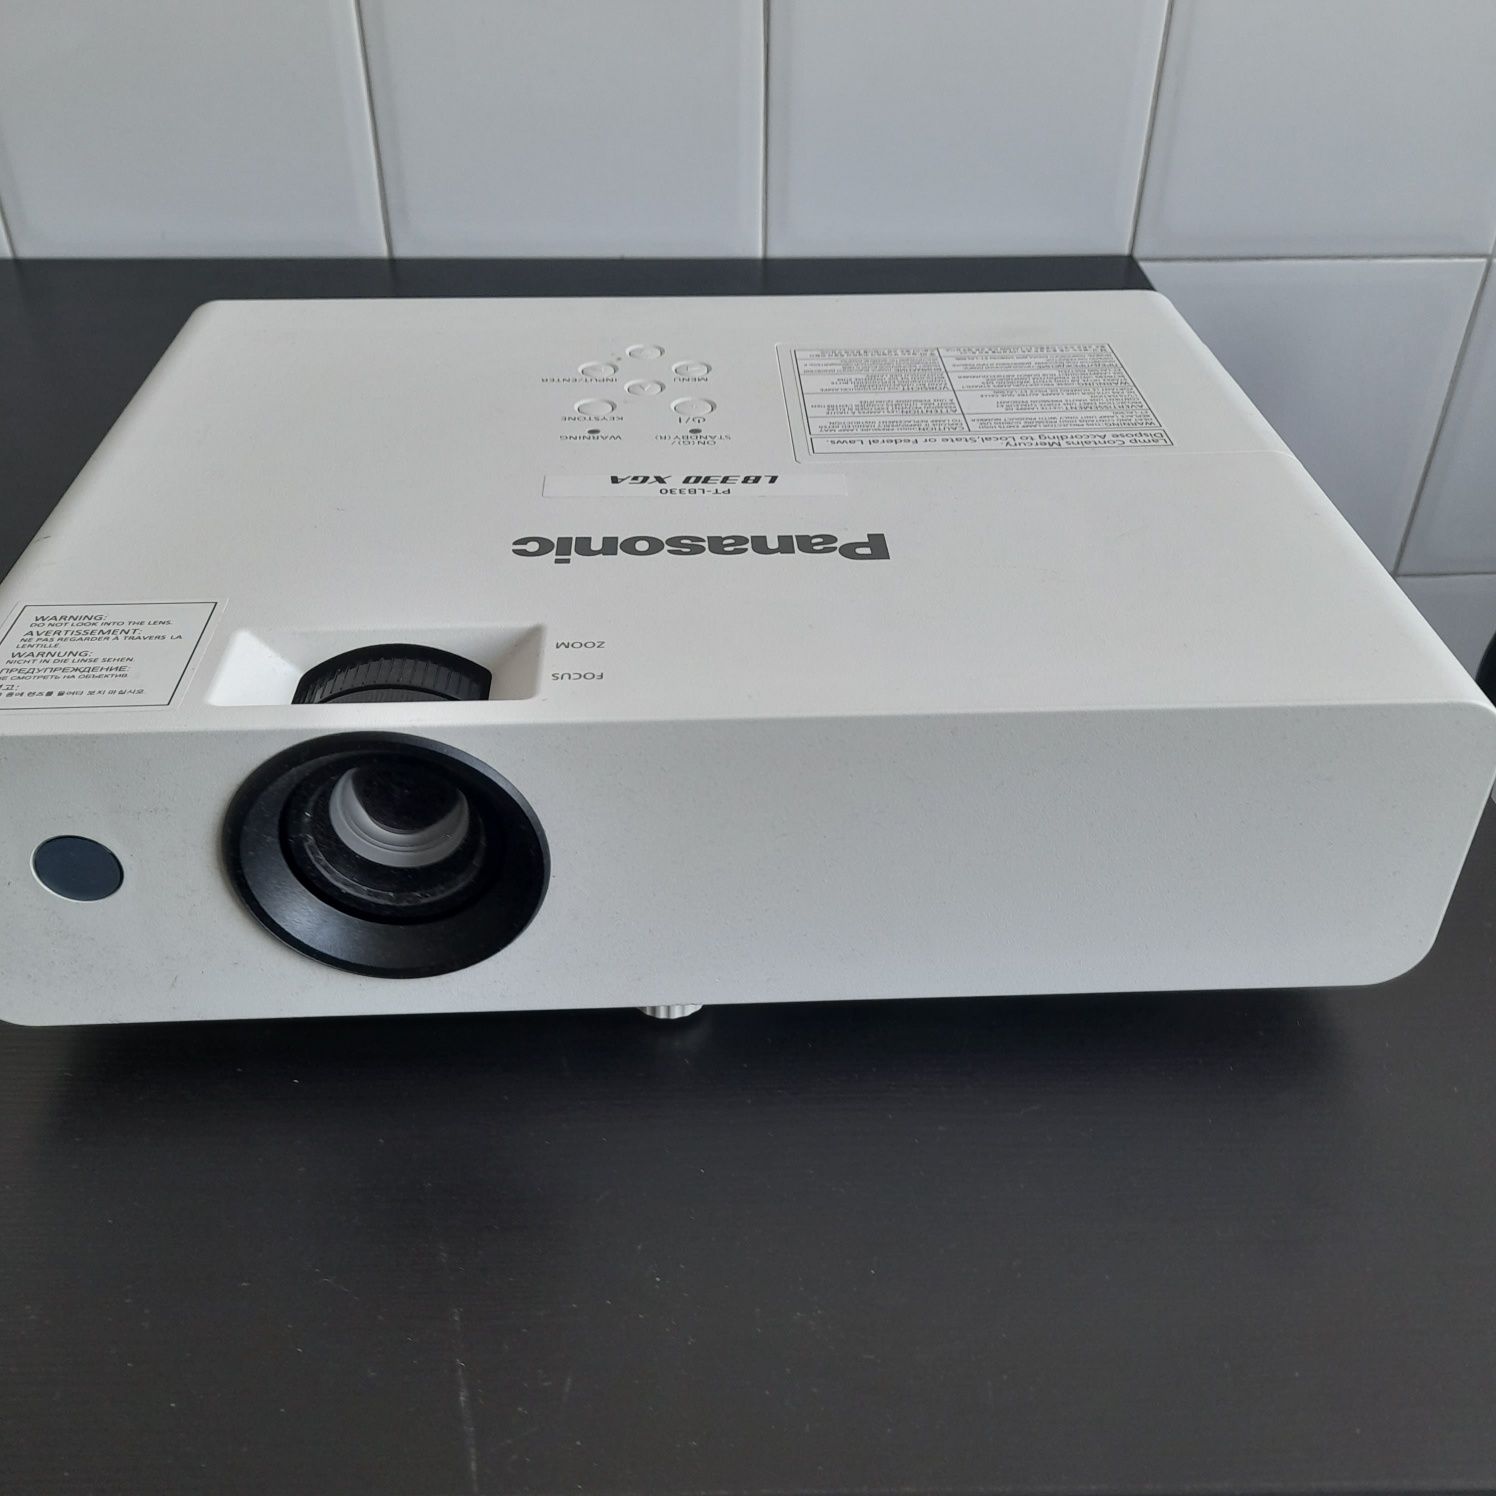 Projector Panasonic LB 330 XGA